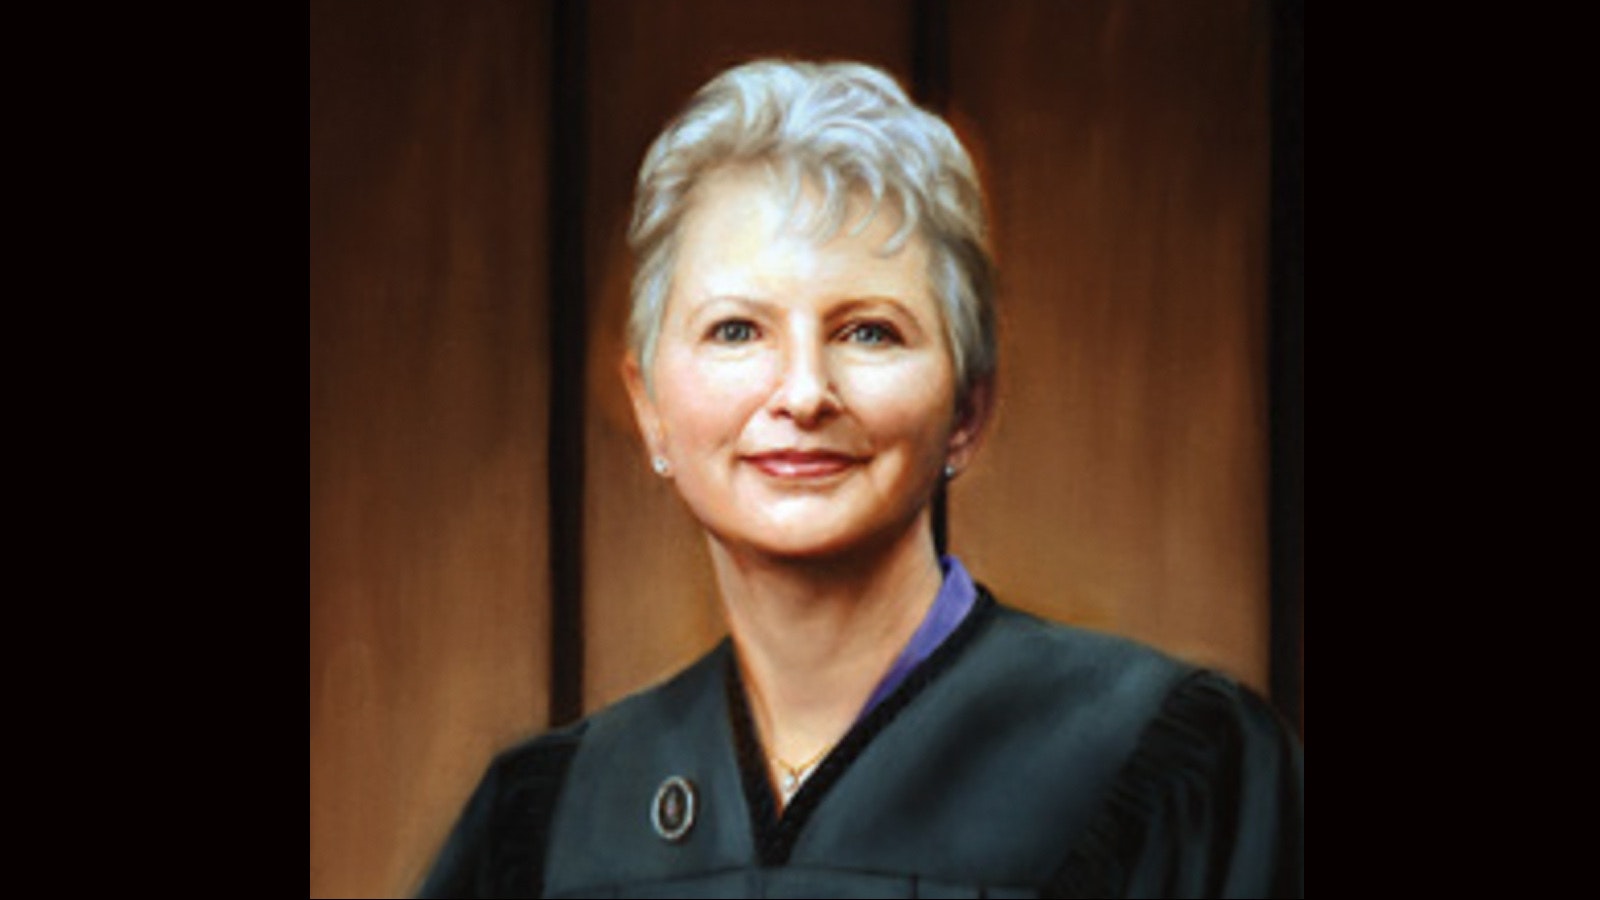 Judge freudenthal